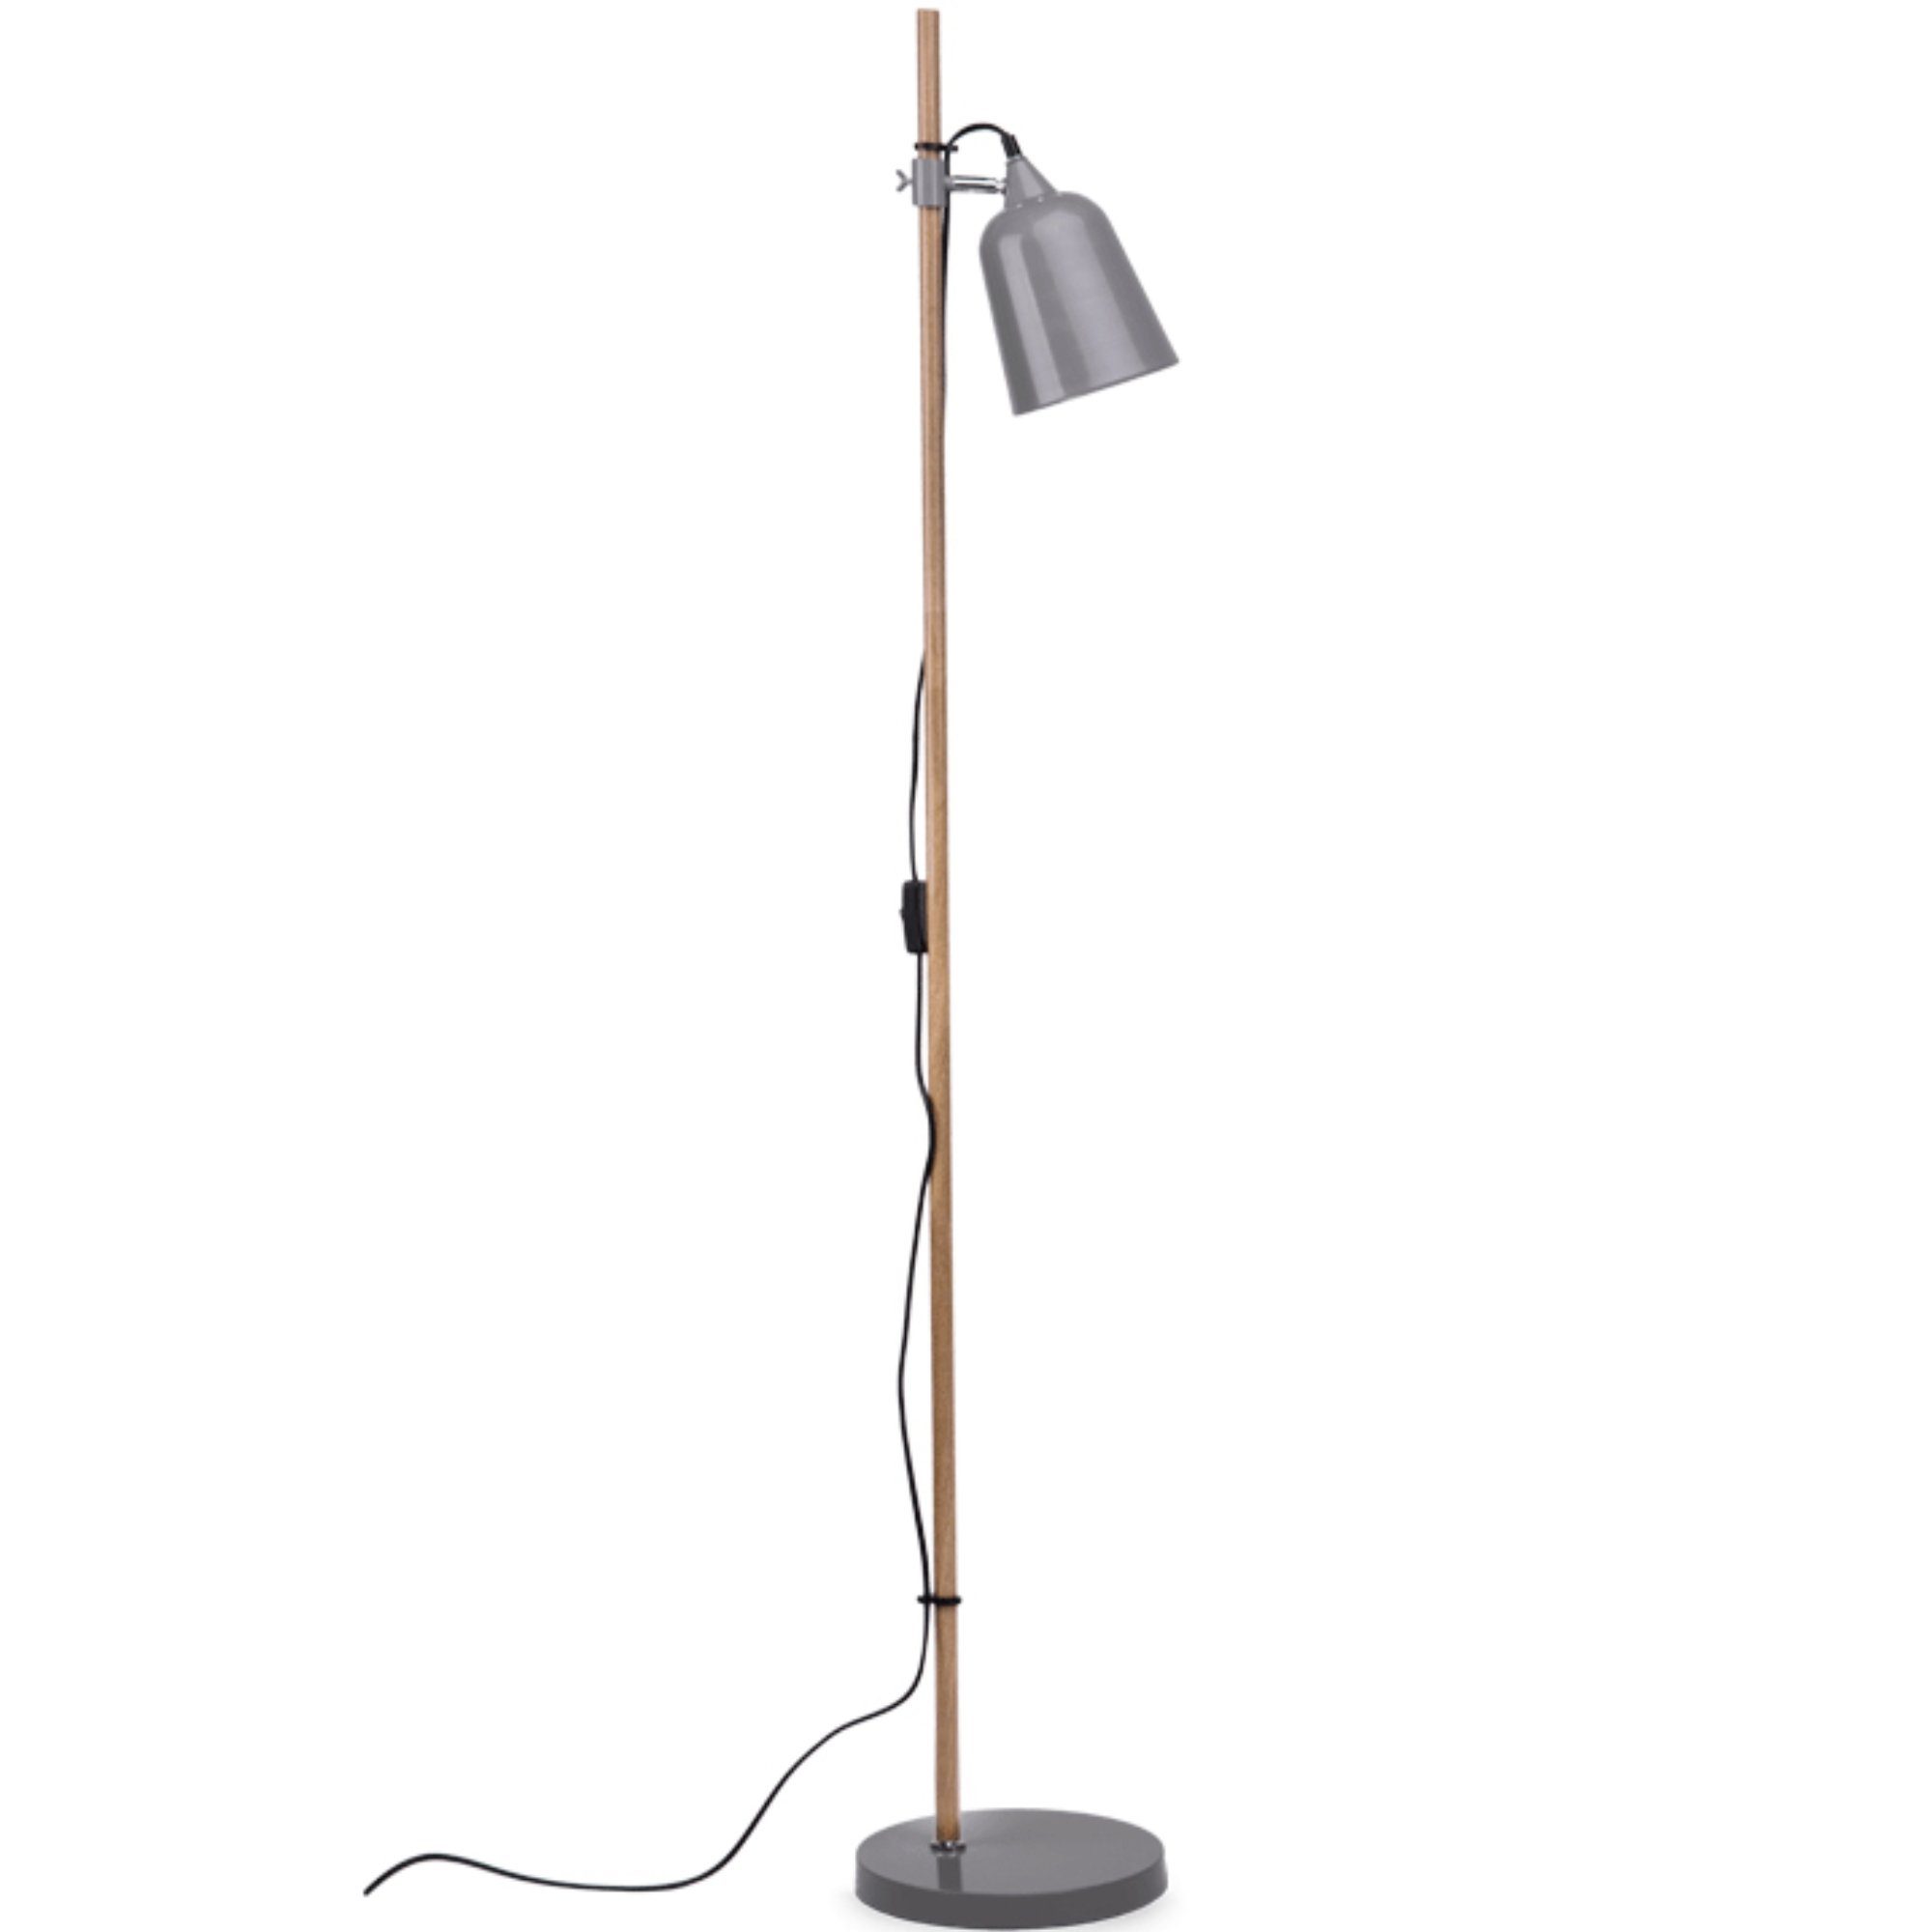 150cm, PLISO Stehlampe E14 Stehleuchte Konsimo 3,6m, Leuchtmittel, Skandinavischer grau ohne Stil